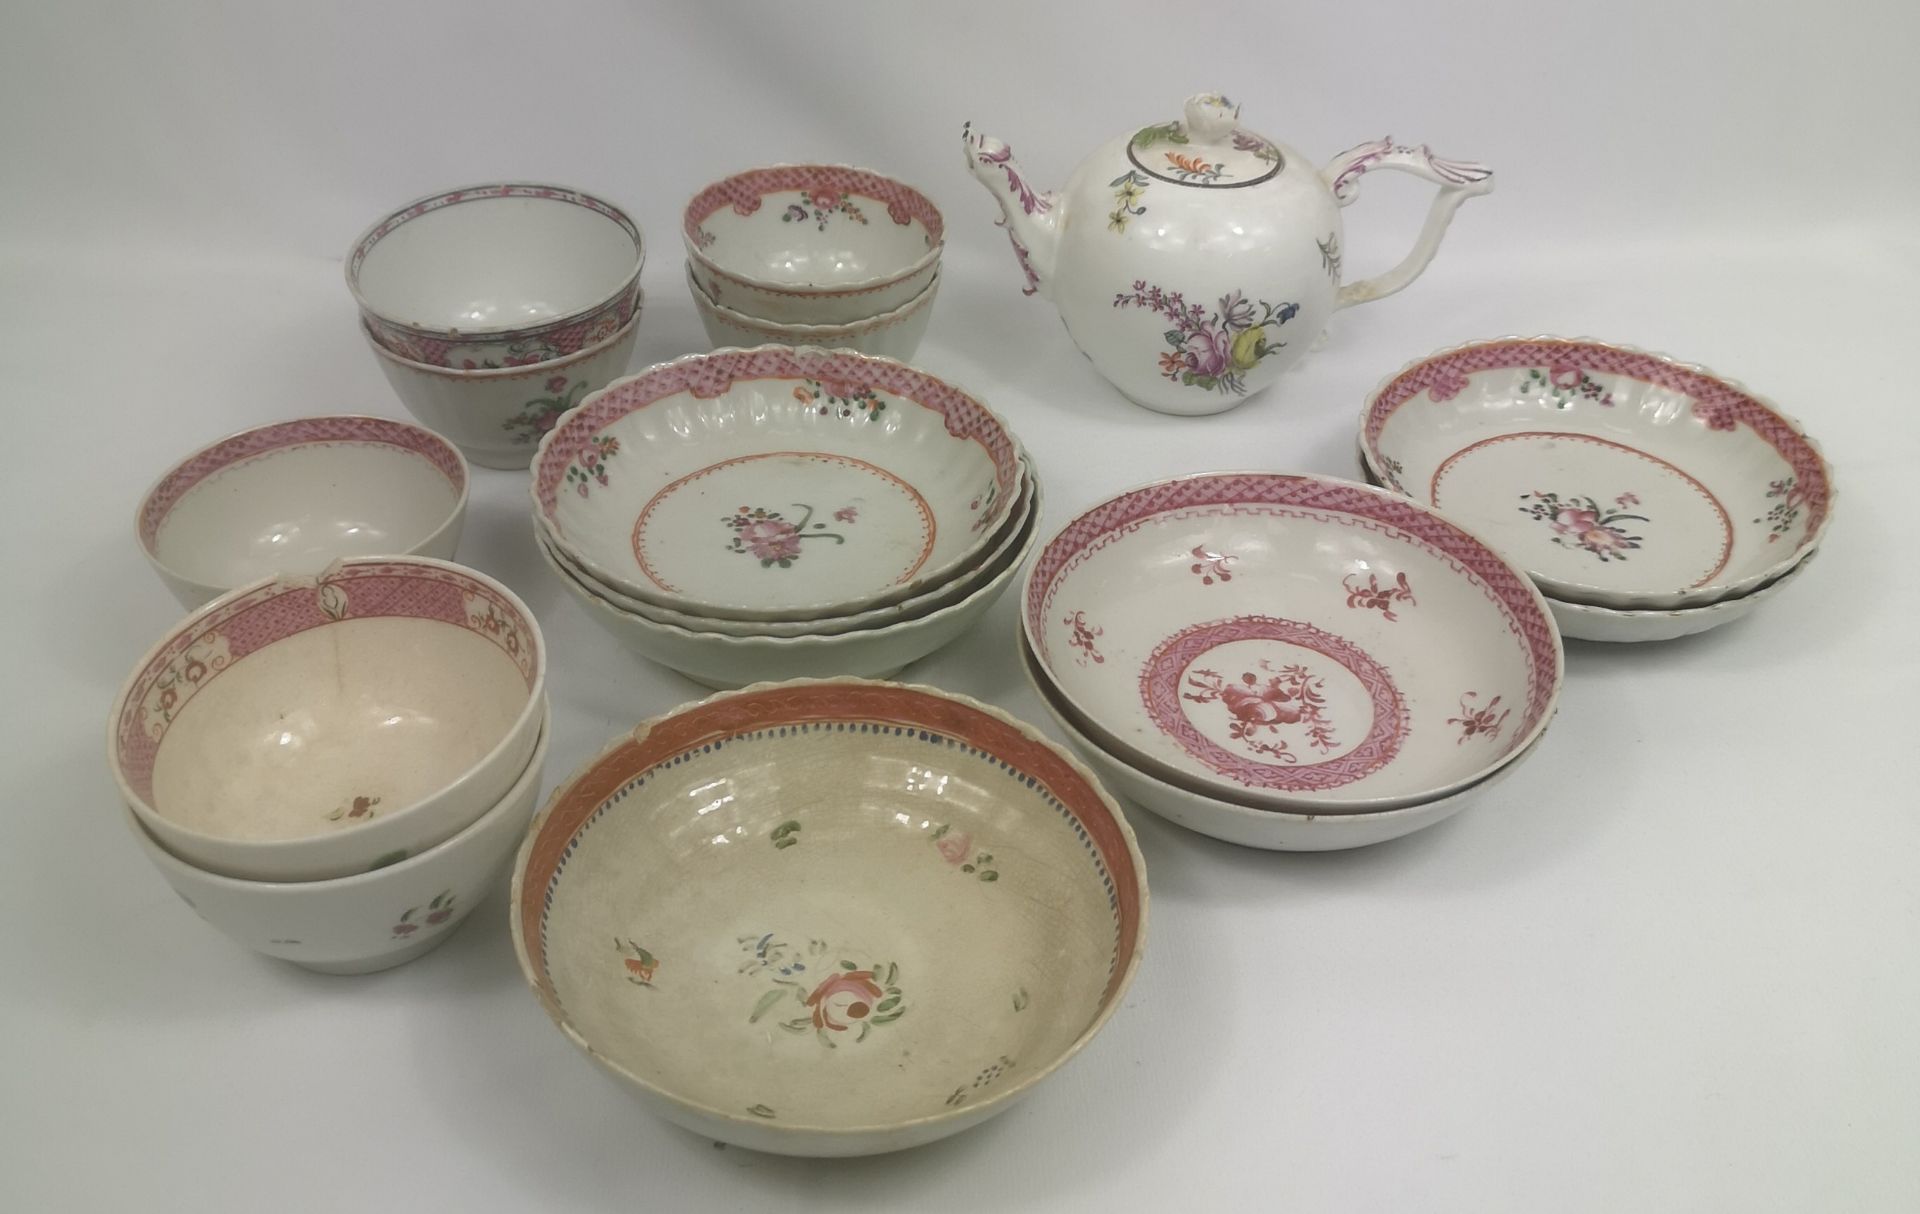 Meissen porcelain teapot together with a quantity of porcelain bowls